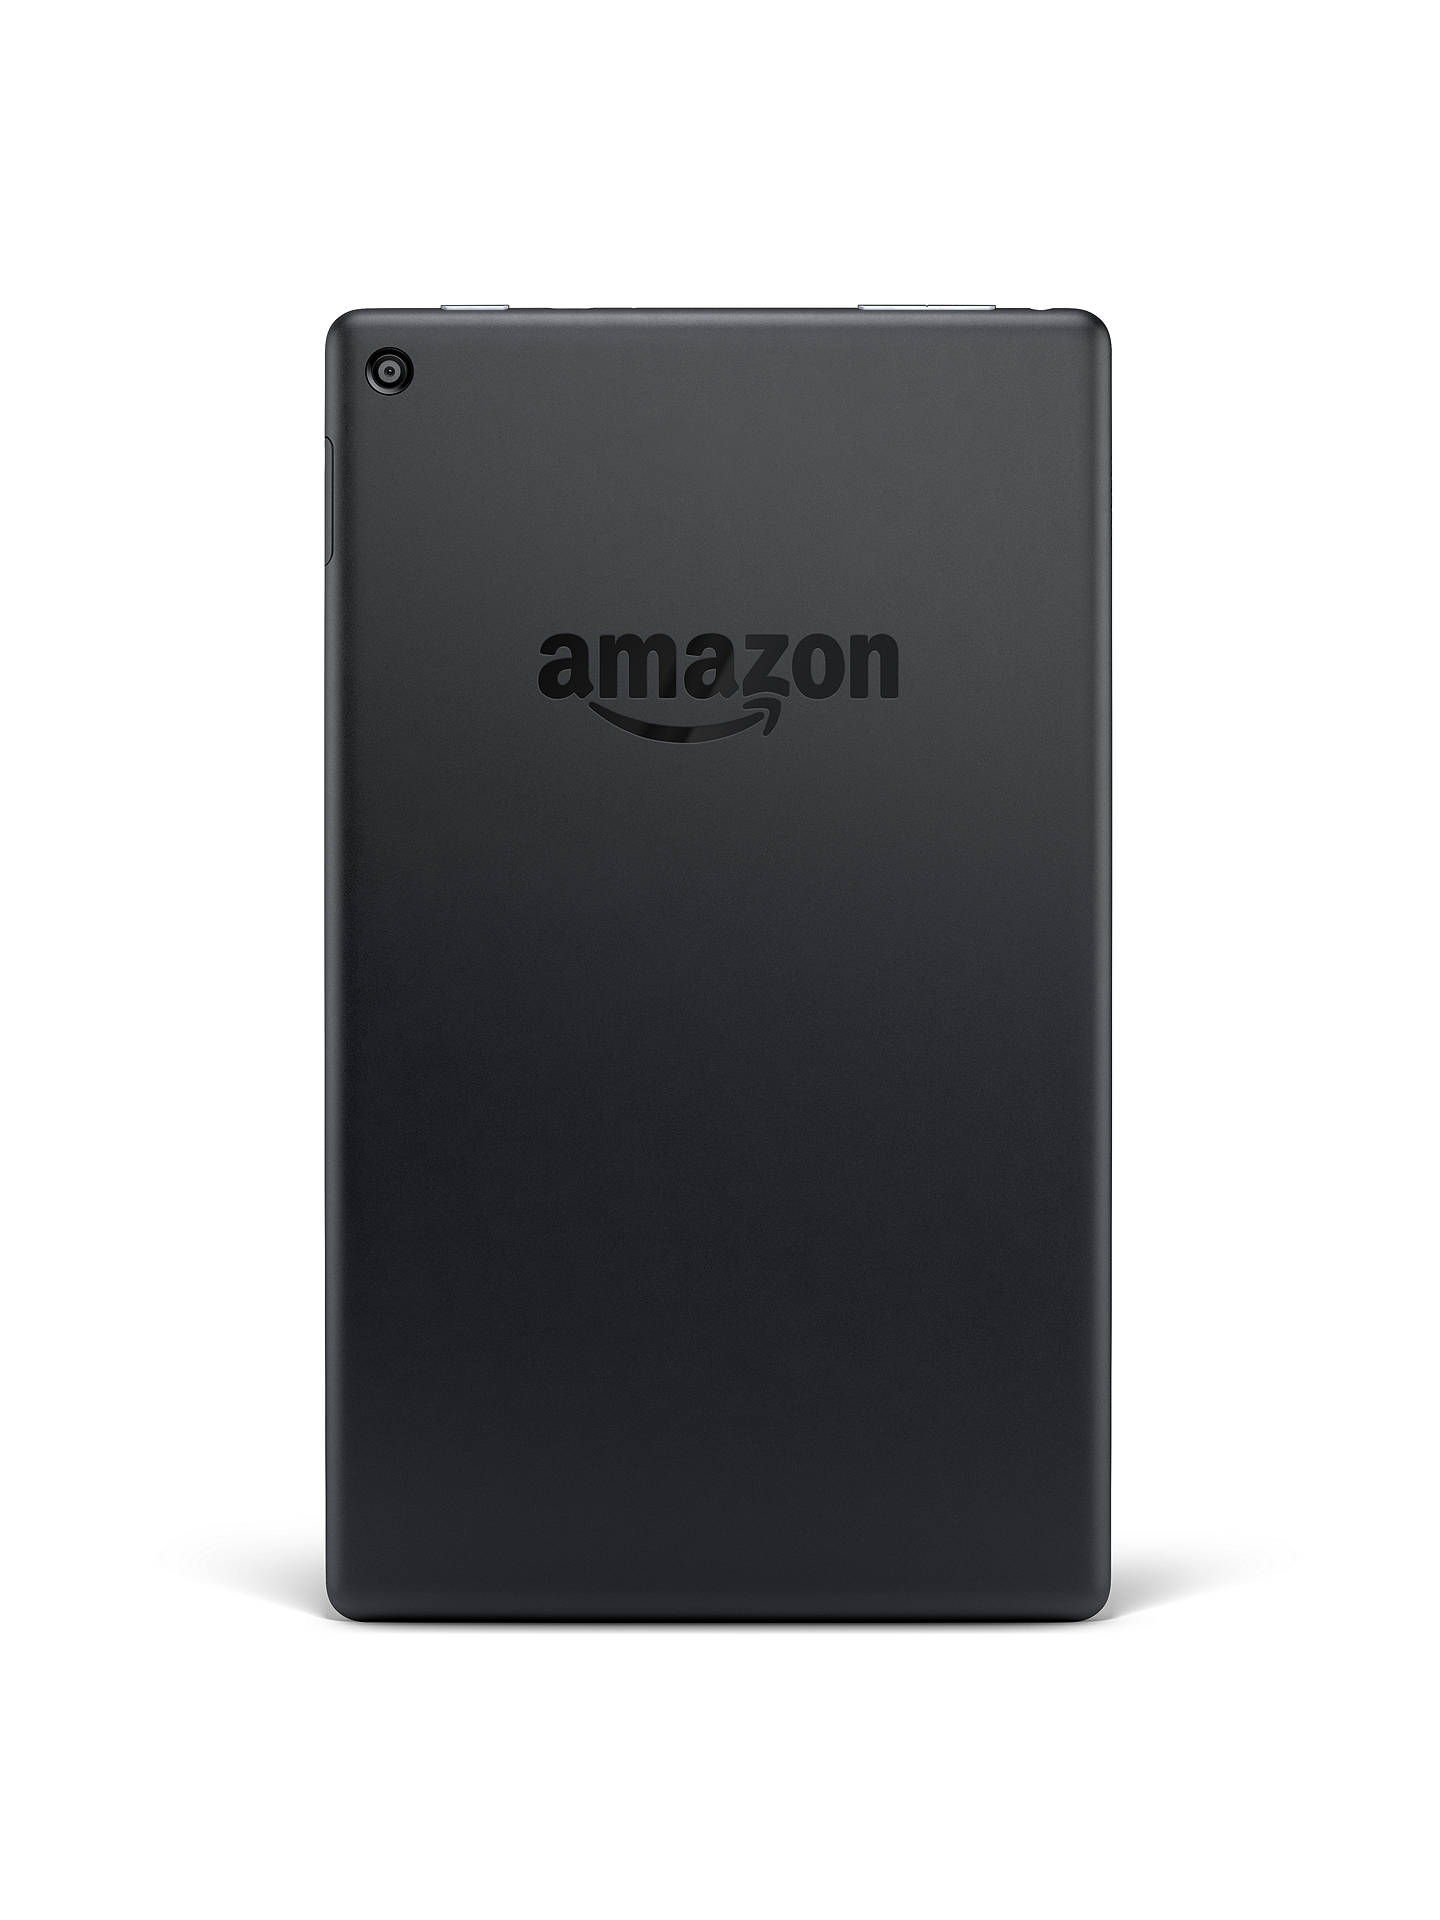 Amazon Fire HD 8 Tablet, Quad-Core, Fire OS, Wi-Fi, 32GB, 8